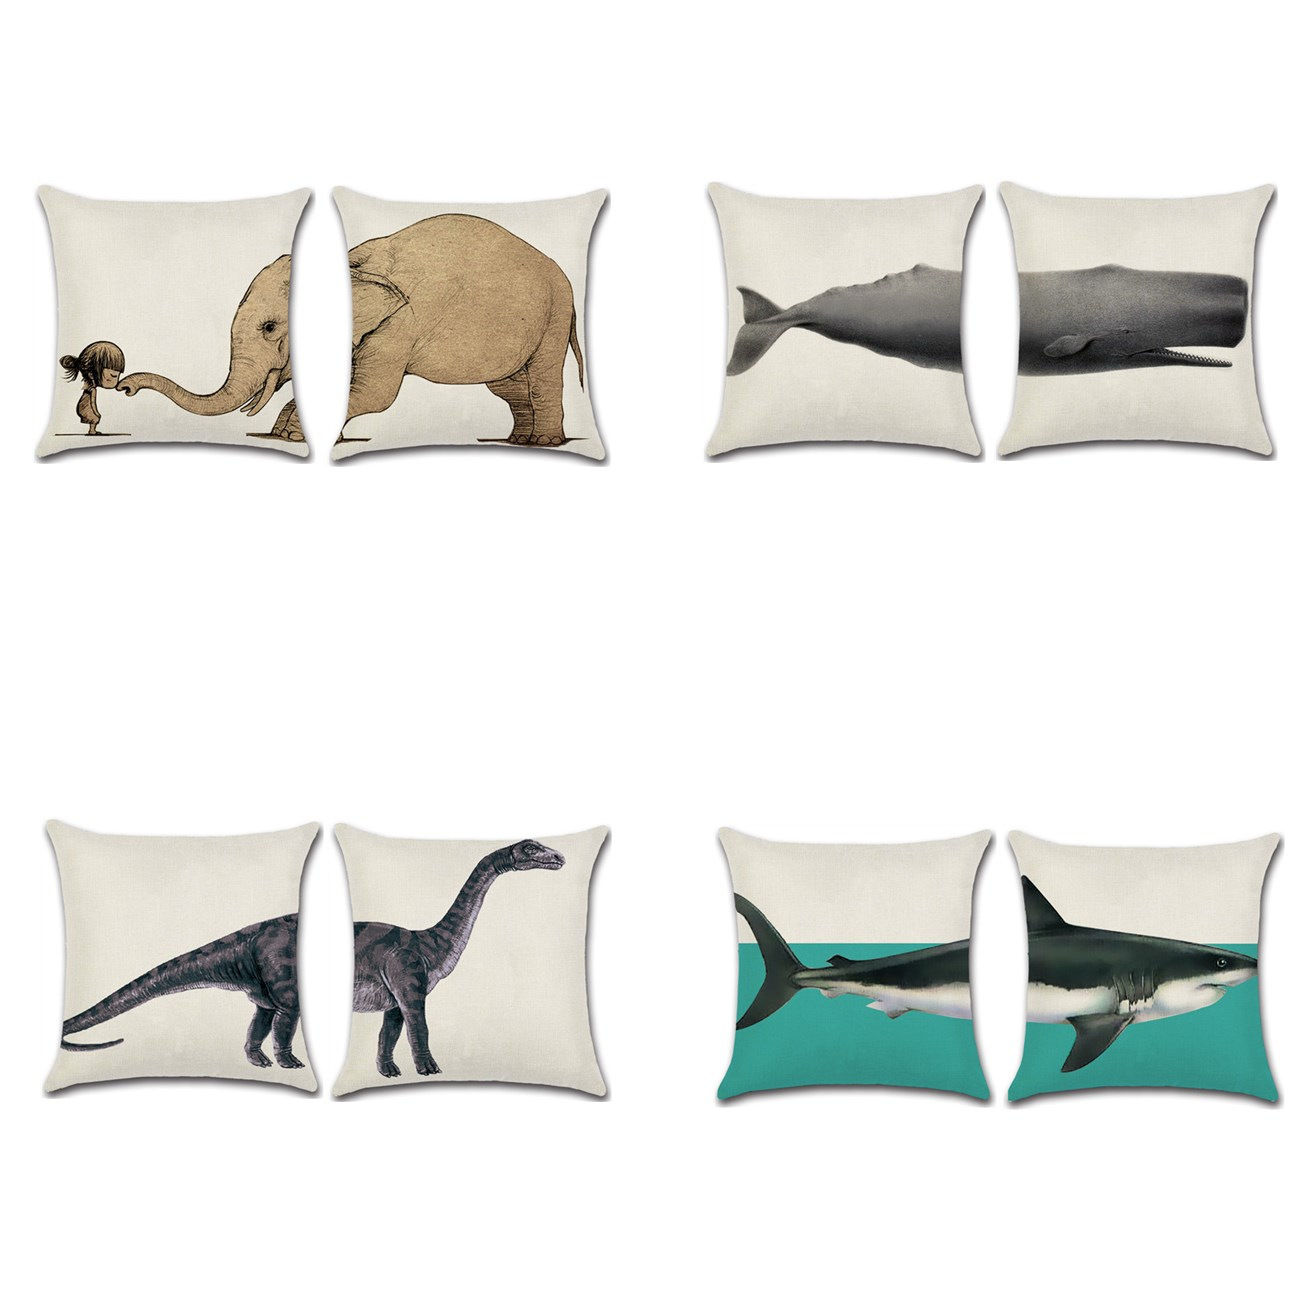 Elephant-Shark-Whale-Dinosaur-Cushion-Cover-Cotton-Linen-Pillow-Case-Throw-Wedding-Decor-Pillowcase-1367063-1